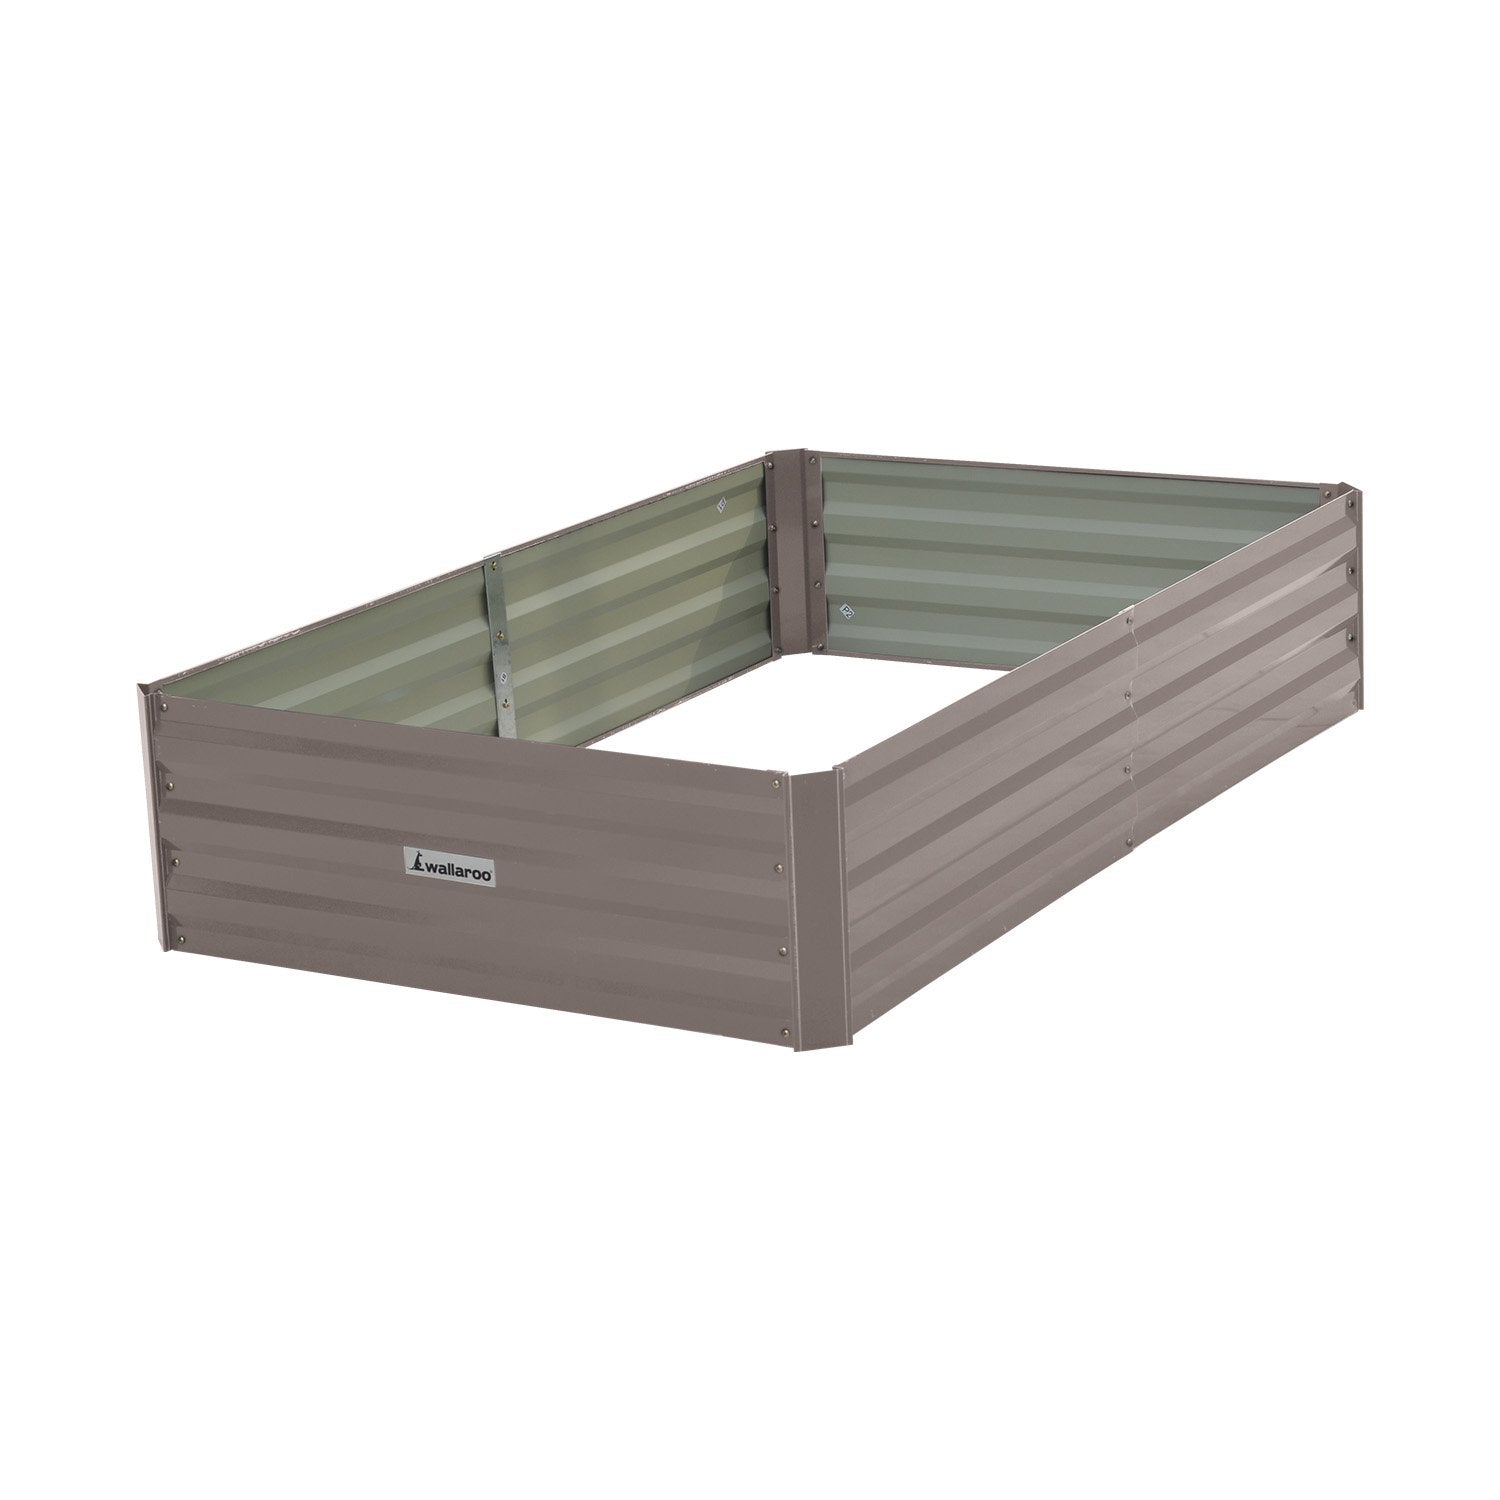 Wallaroo Garden Bed Galvanized Steel - Grey 150 x 90 x 30cm